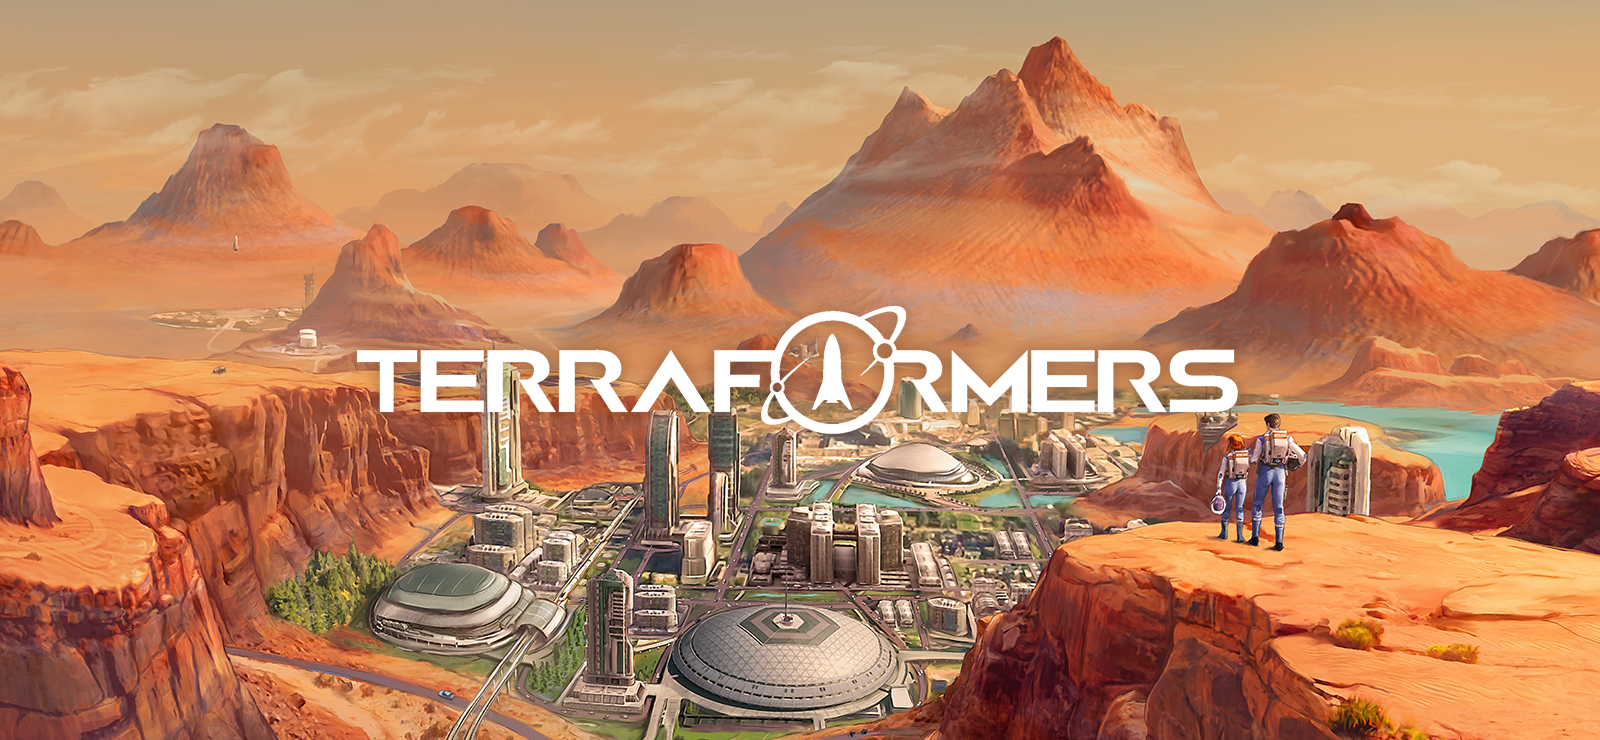 Terraformers - Supporter Pack